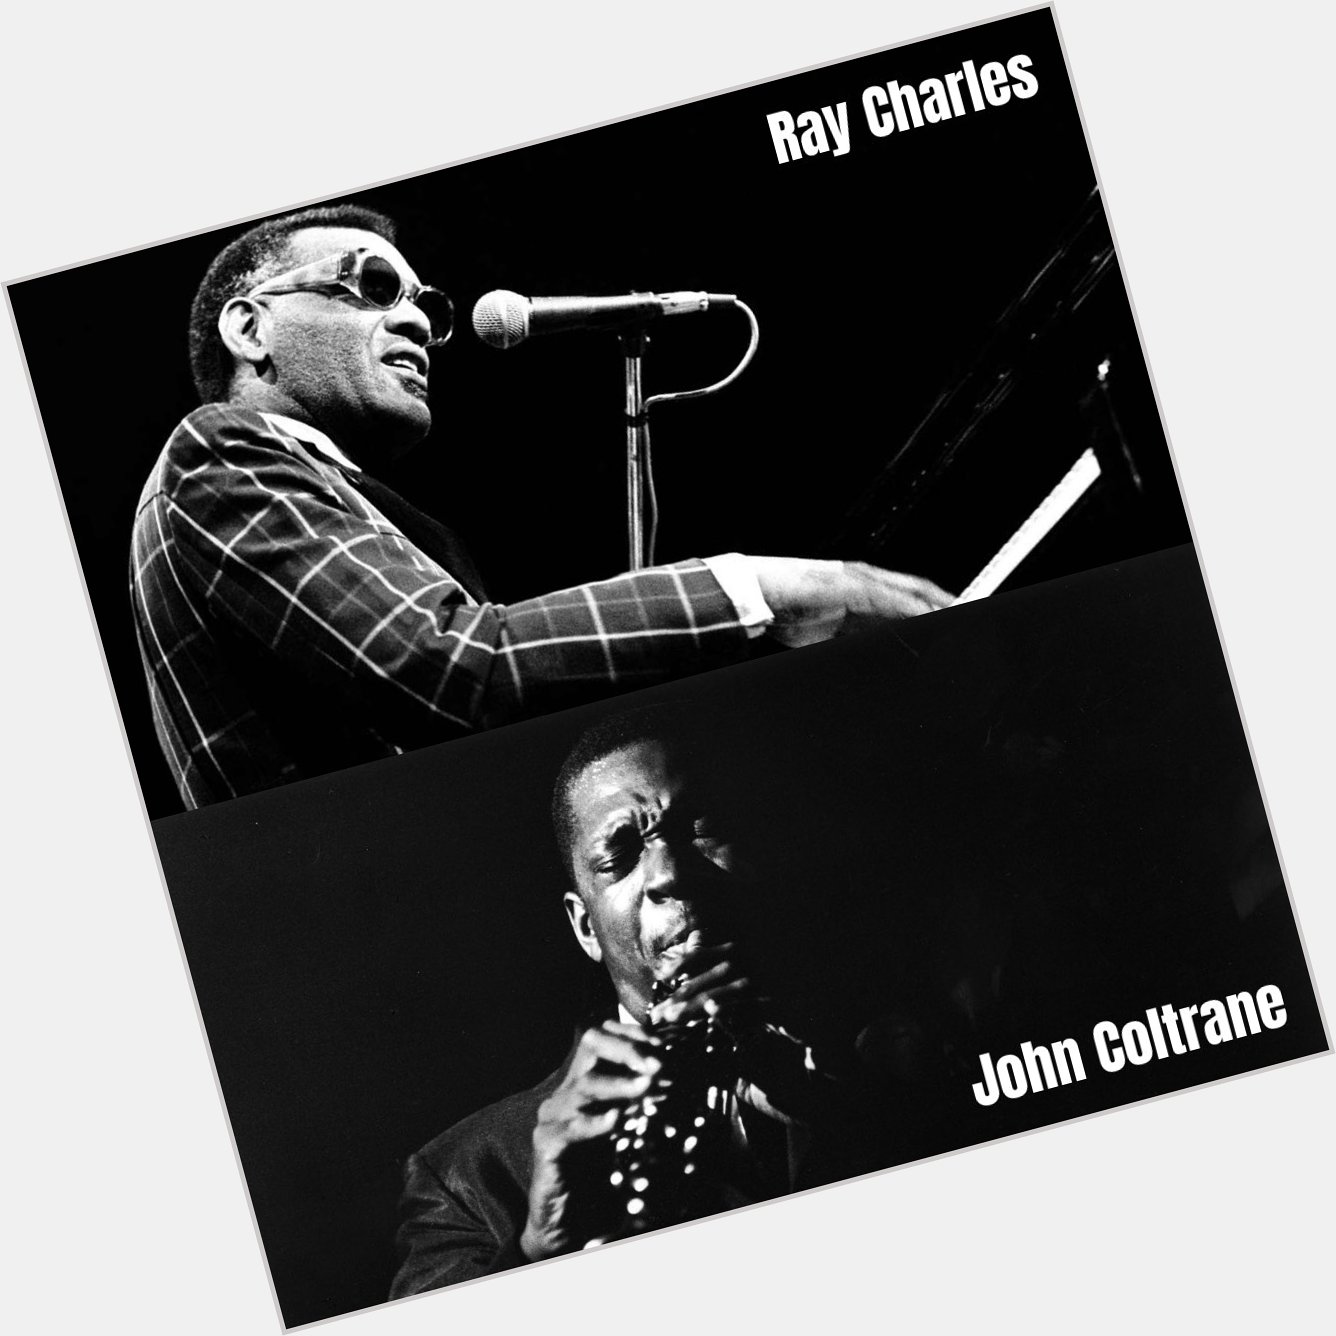 Happy birthday to Ray Charles & John Coltrane! 